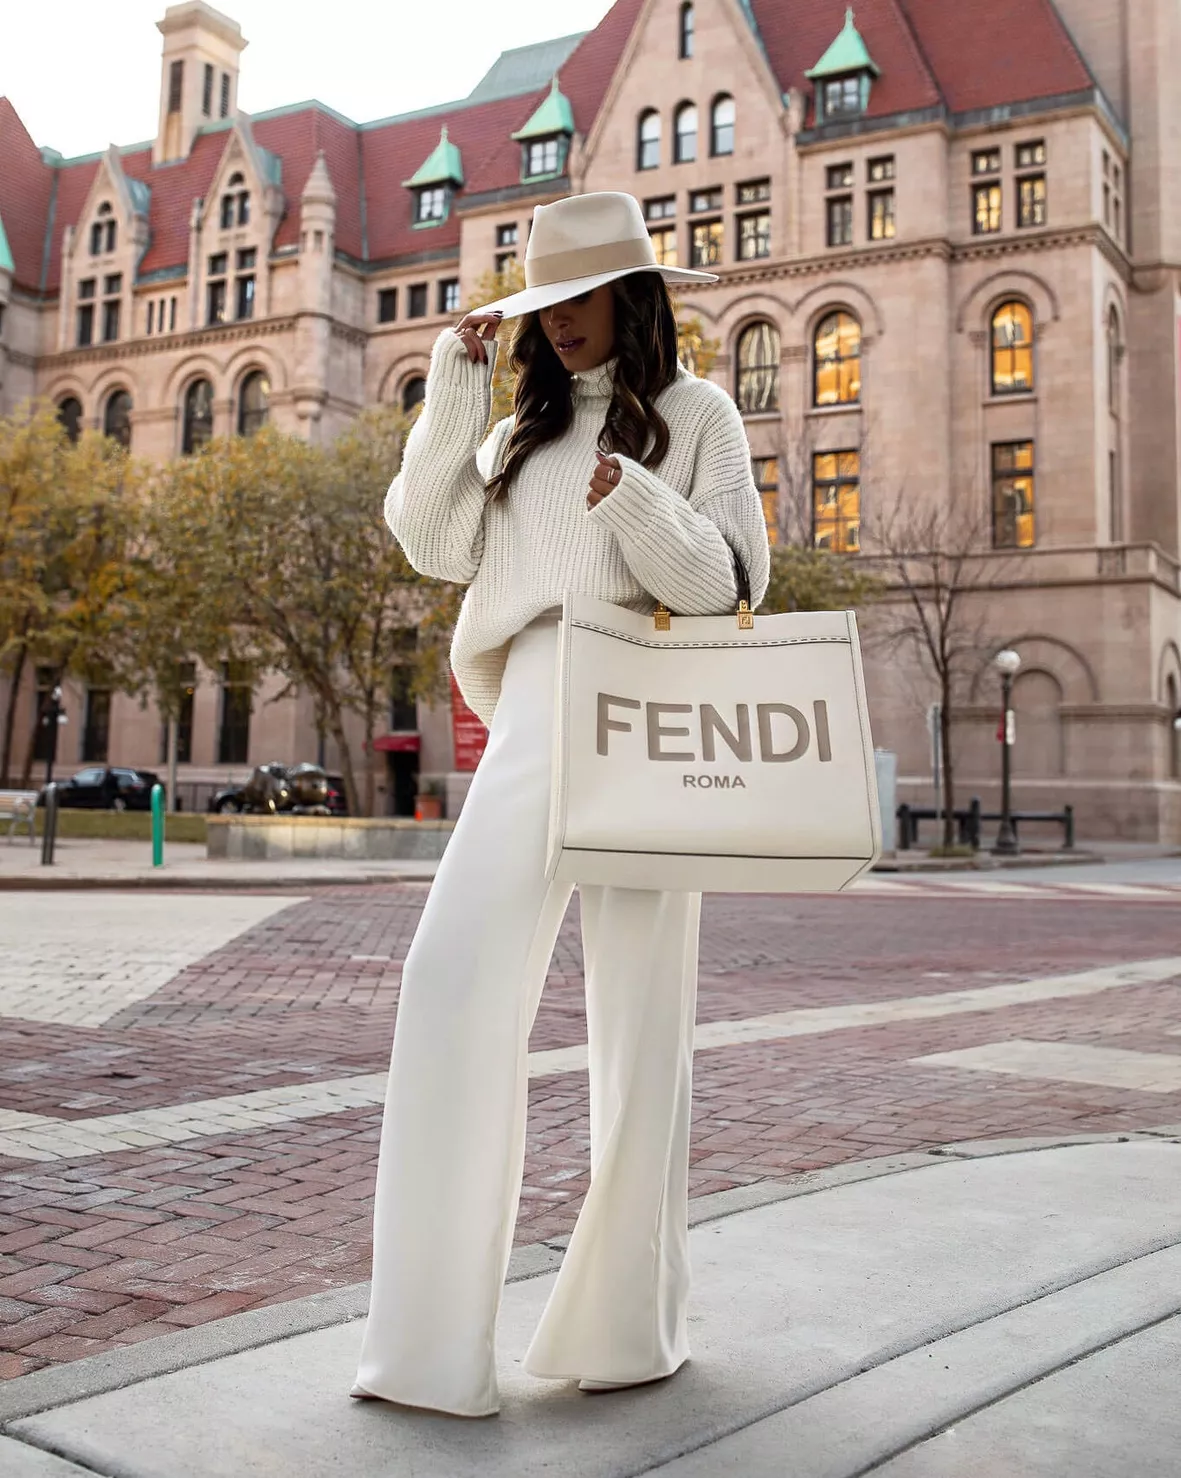 Fendi Bags for sale in Sydney, Australia